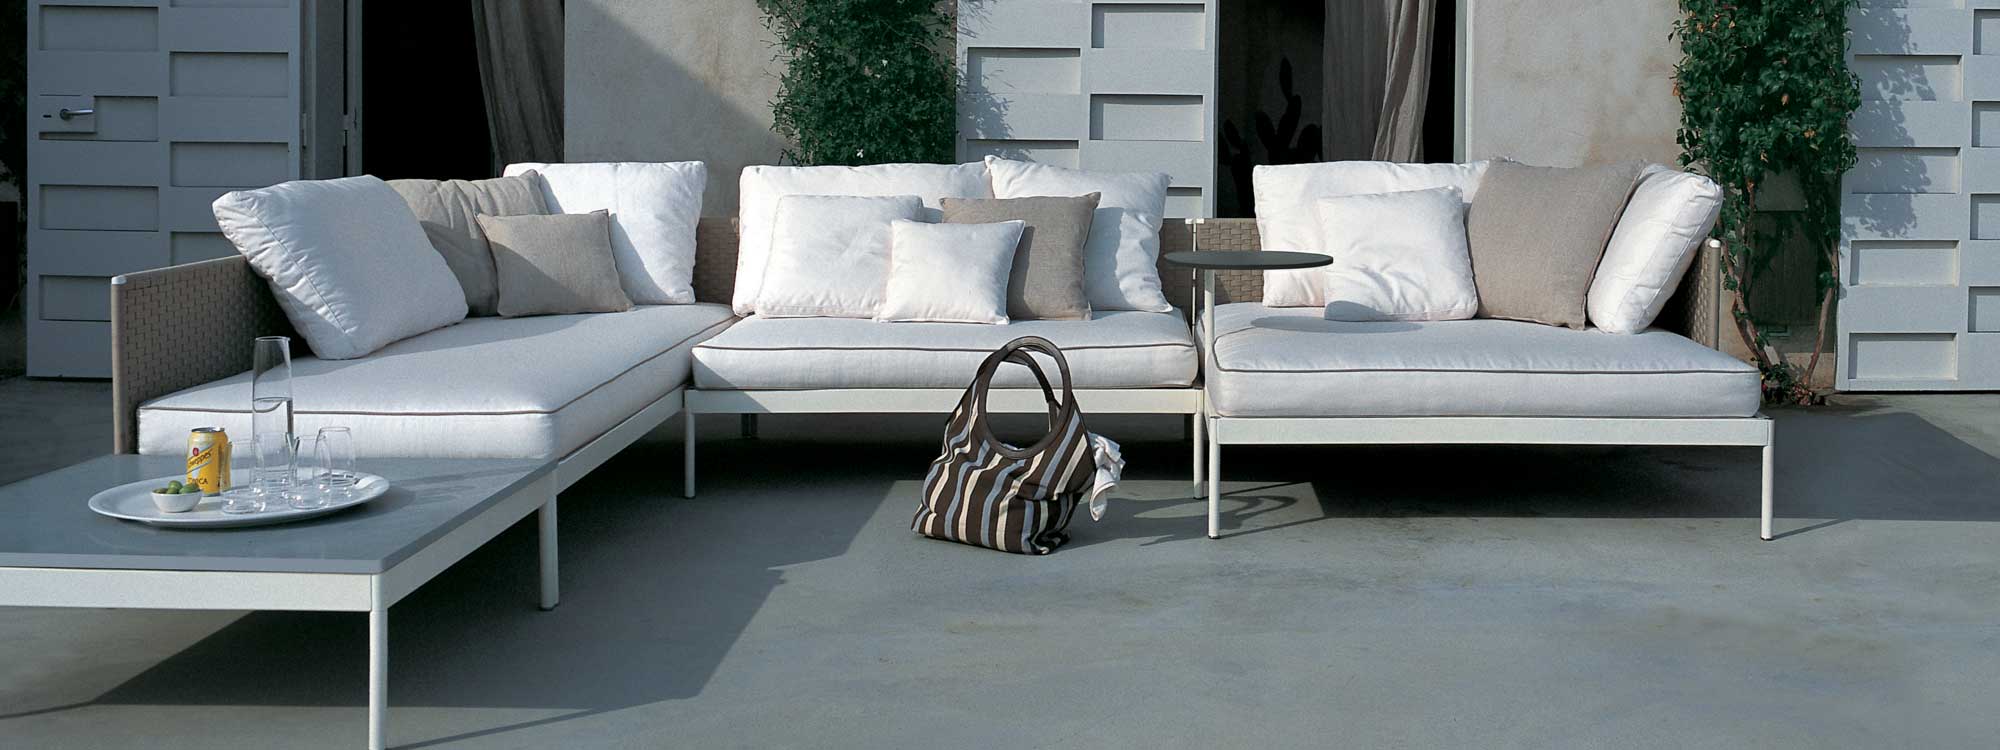 Image of RODA Basket white garden corner sofa with Sand-colored backs, shown in modern terrace